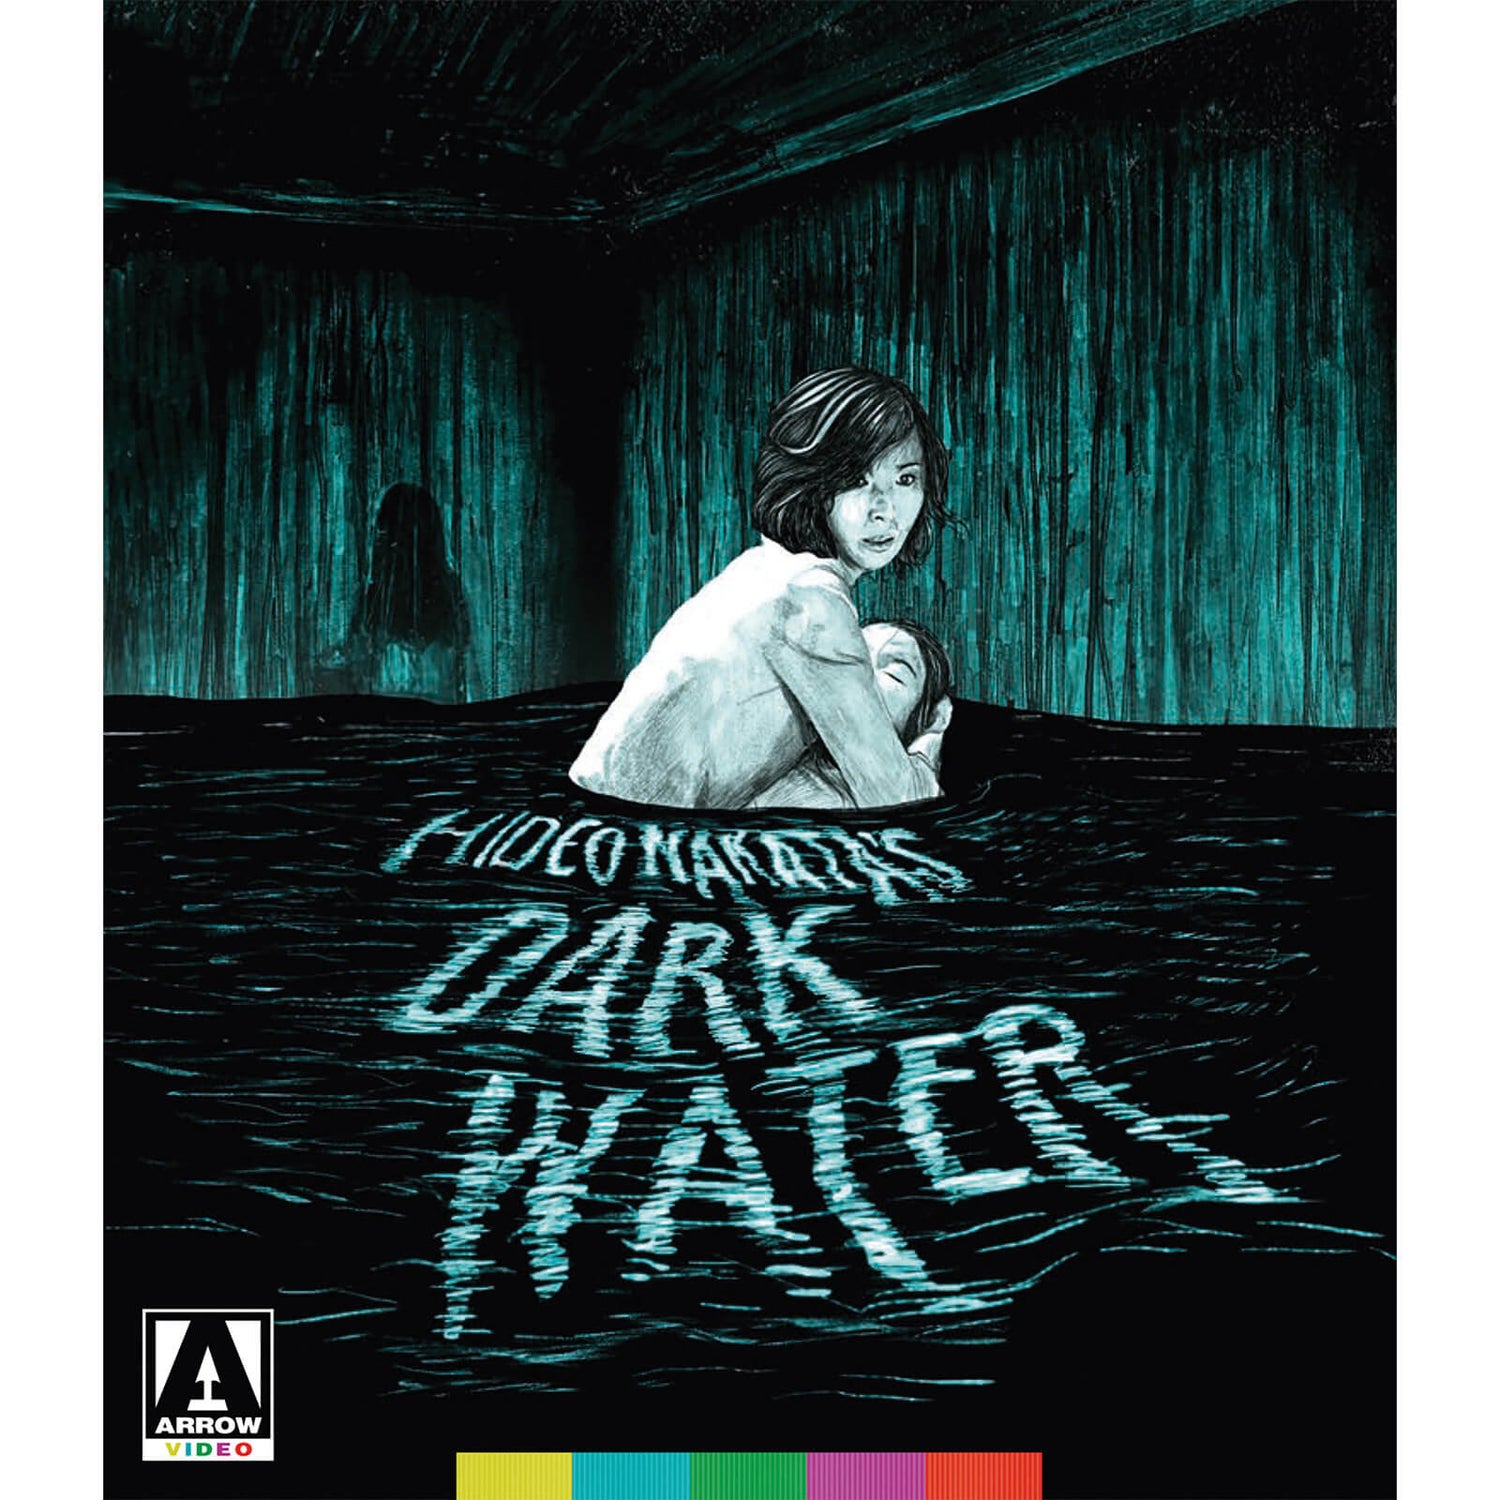 Dark Water Blu-ray+DVD